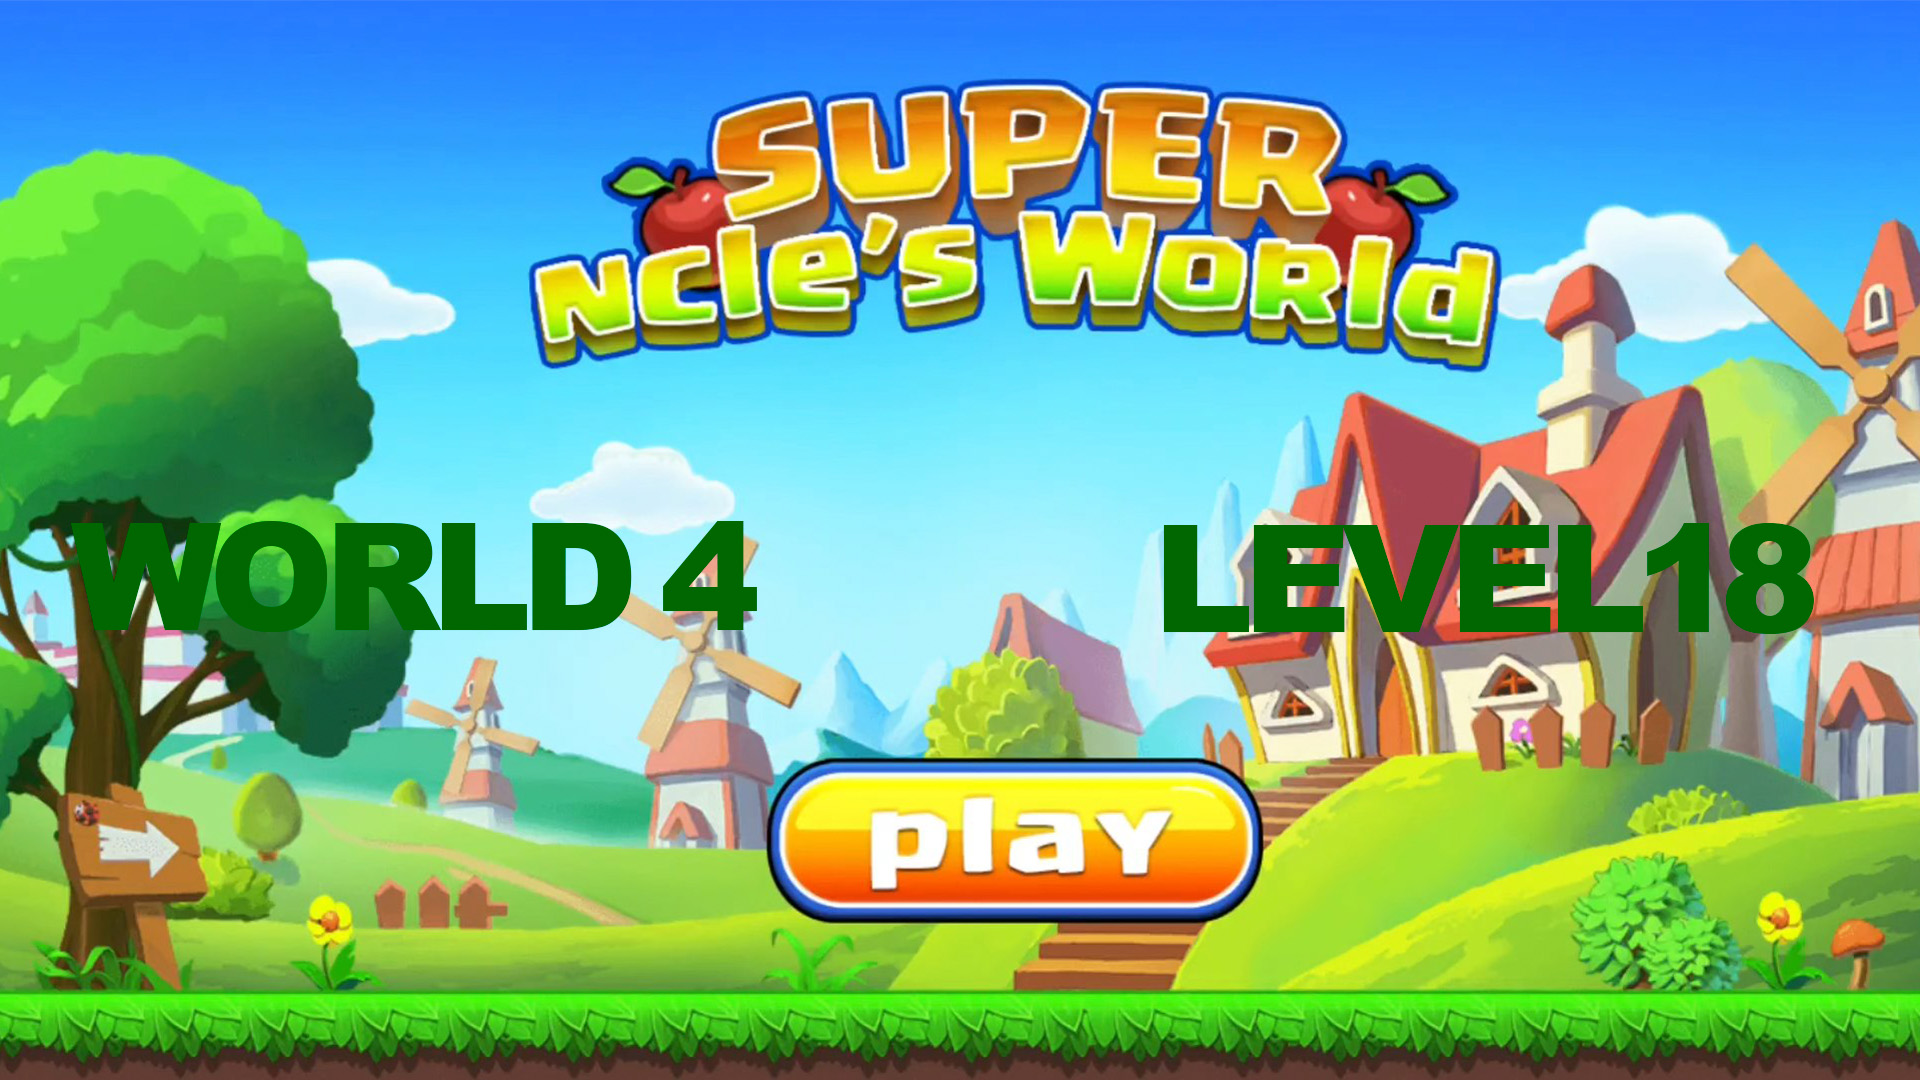 Super ncle's  World 4. Level 18.